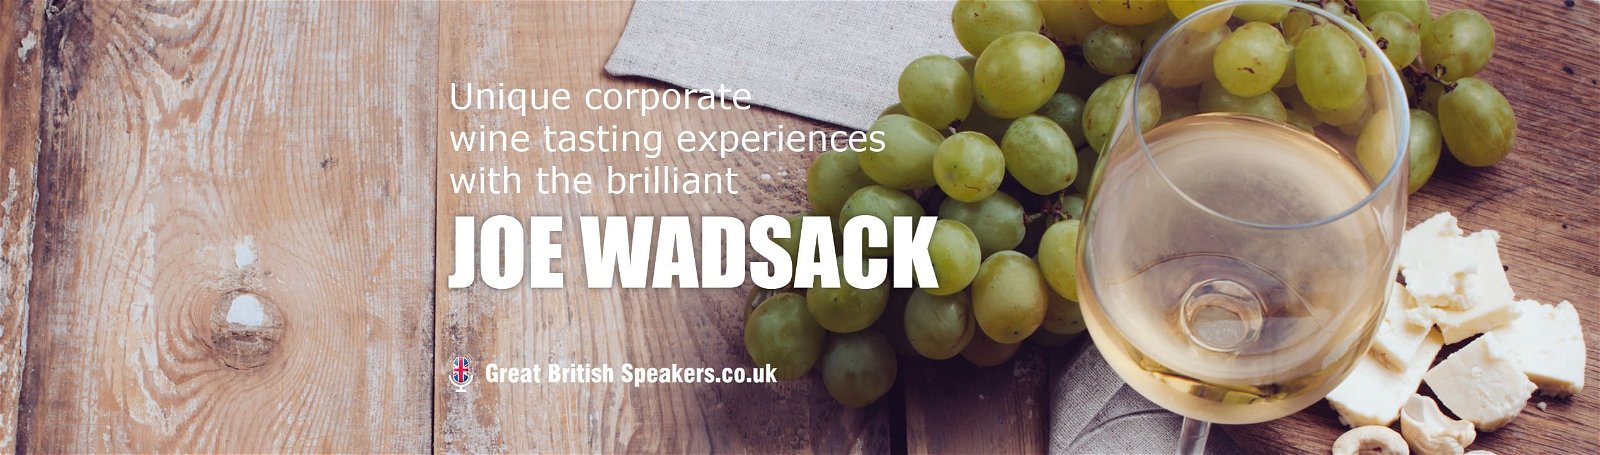 Joe-Wadsack-Event-Header-Image